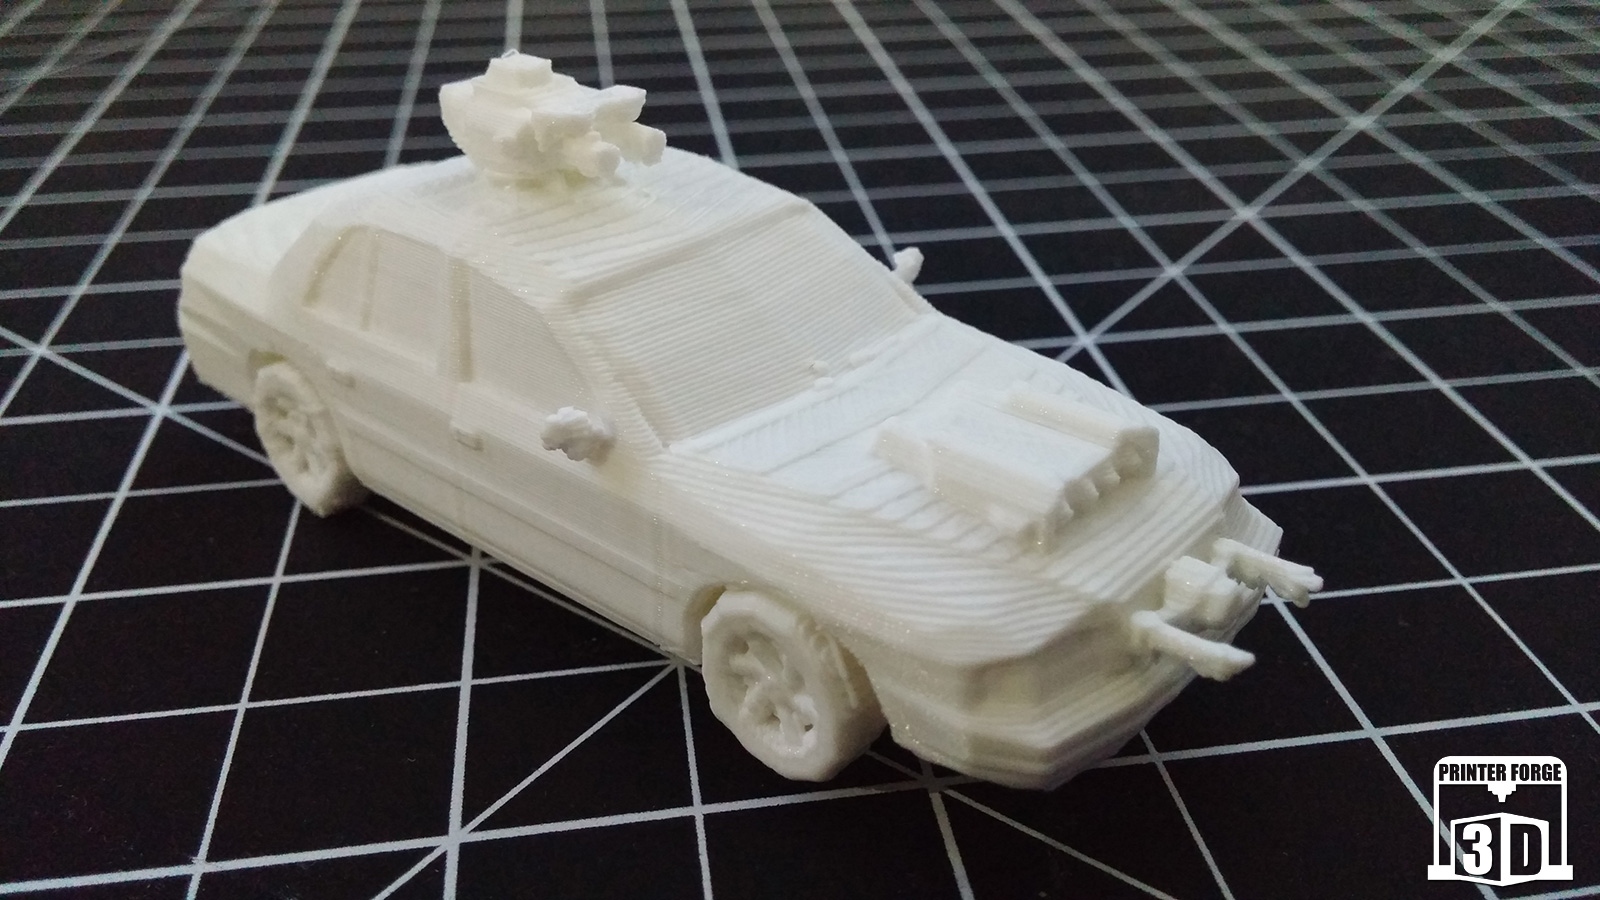 Printer Forge 3D Promotional Cars Mini 001